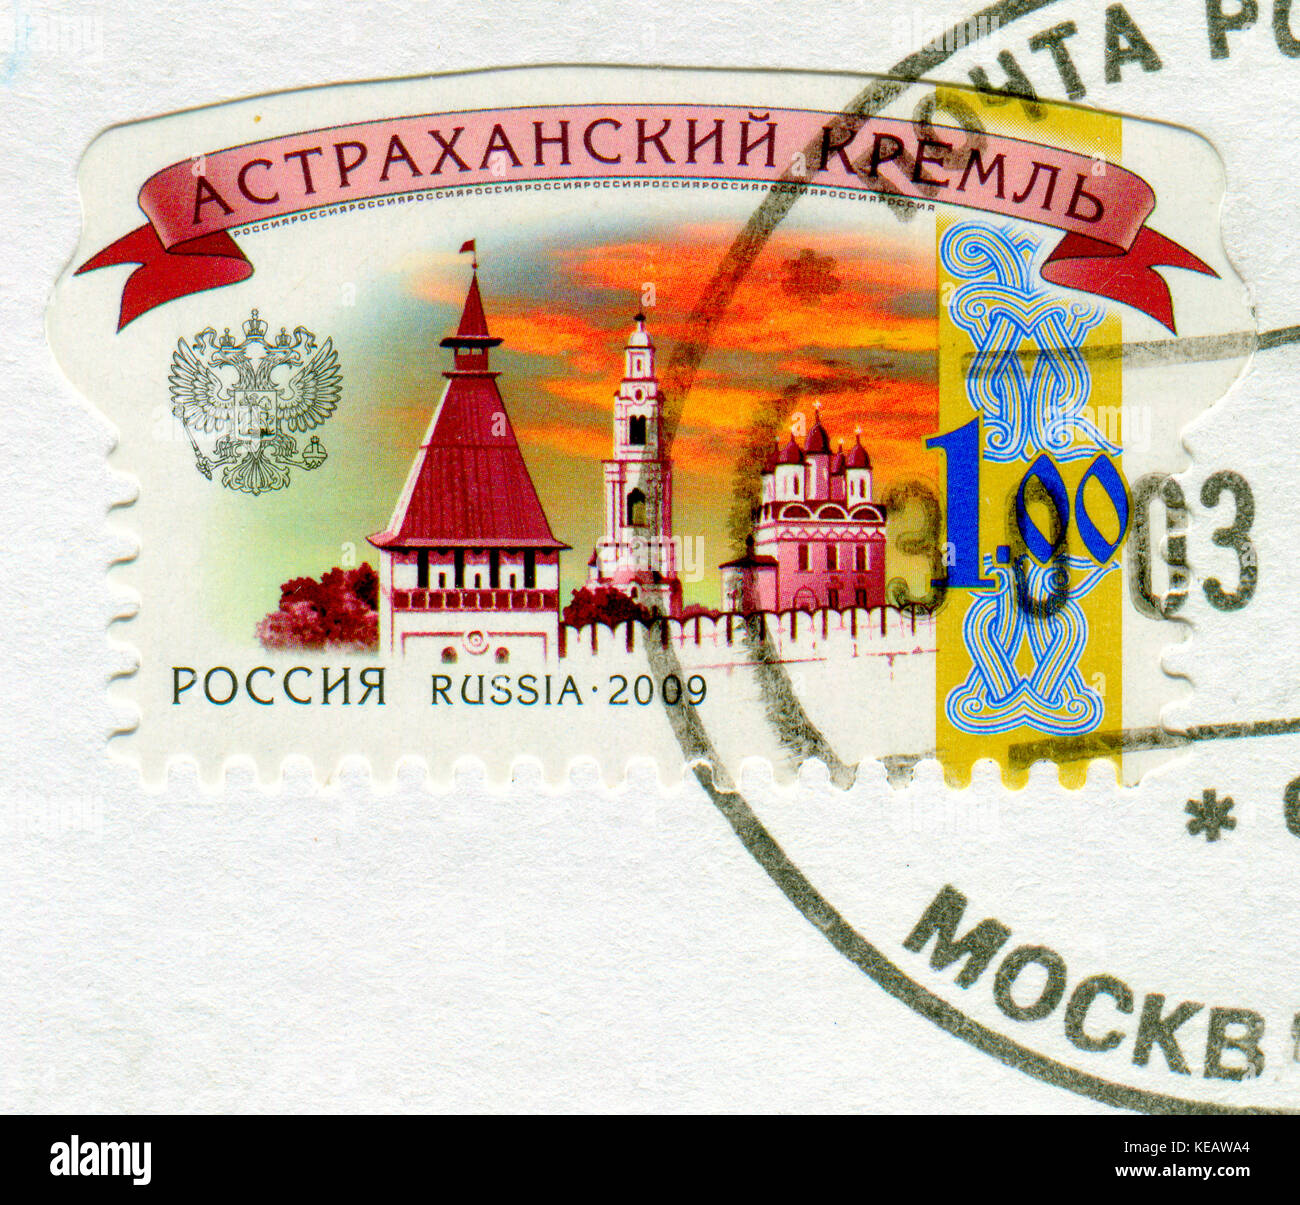 GOMEL, BÉLARUS, 13 octobre 2017, de timbres en Russie montre image du Kremlin d'Astrakhan, vers 2009. Banque D'Images